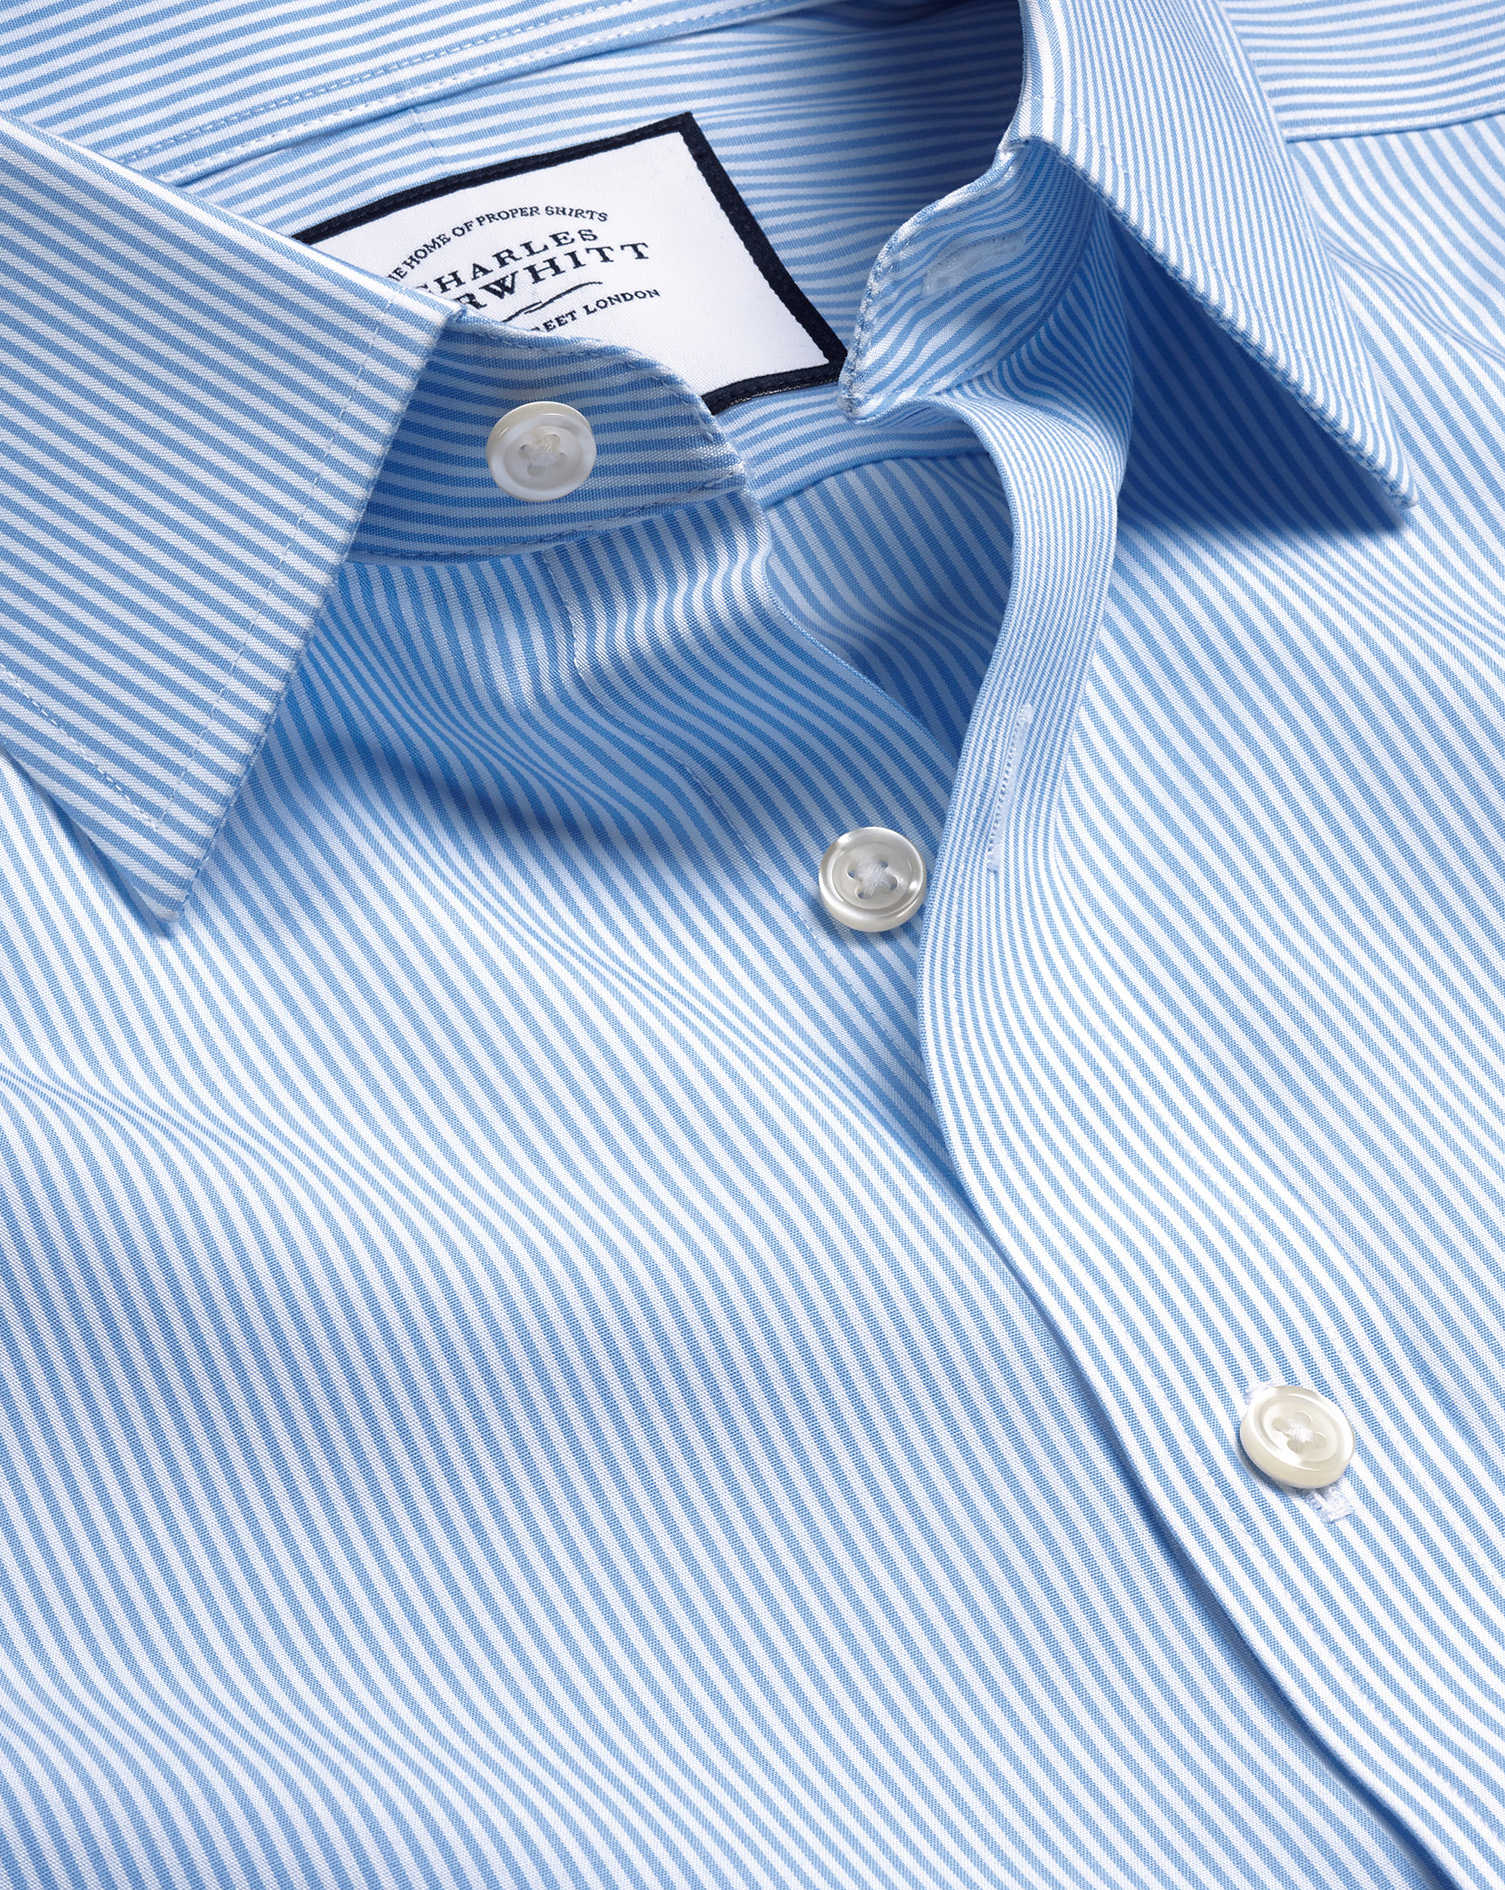 Men's Charles Tyrwhitt Non-Iron Bengal Stripe Dress Shirt - Sky Blue French Cuff Size Small Cotton
